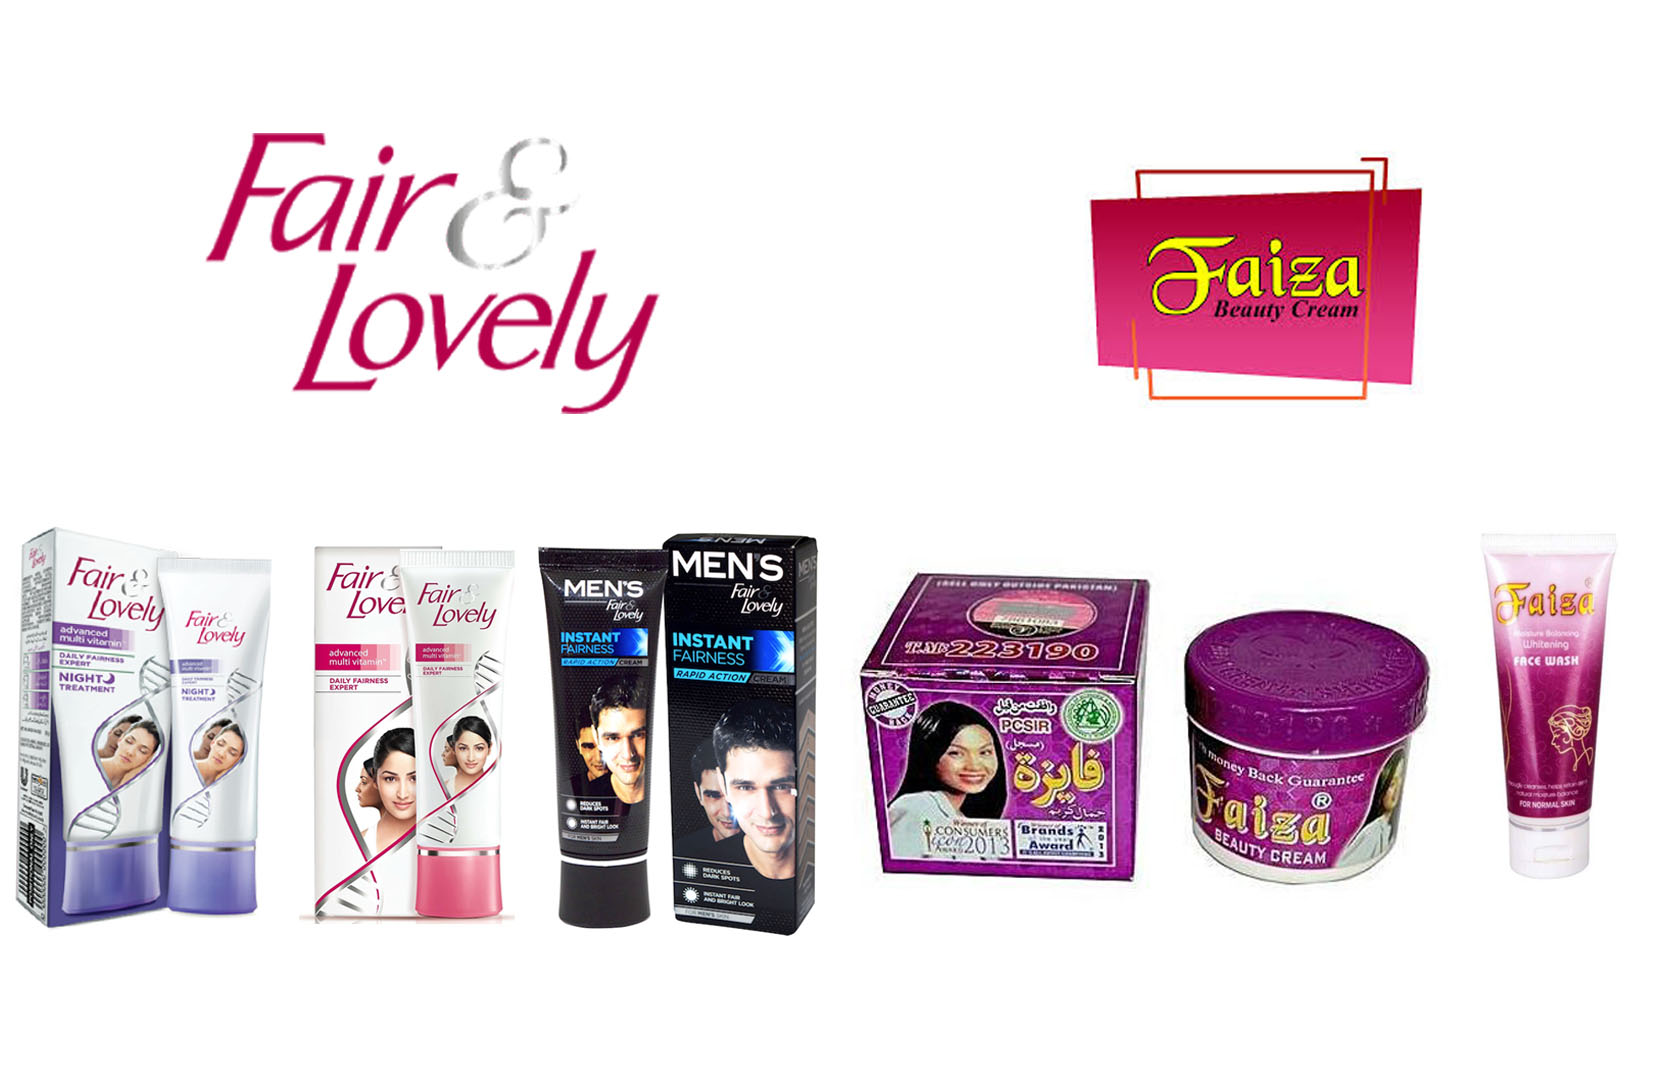 Fair&Lovely and Faiza fairness creams in Pakistan